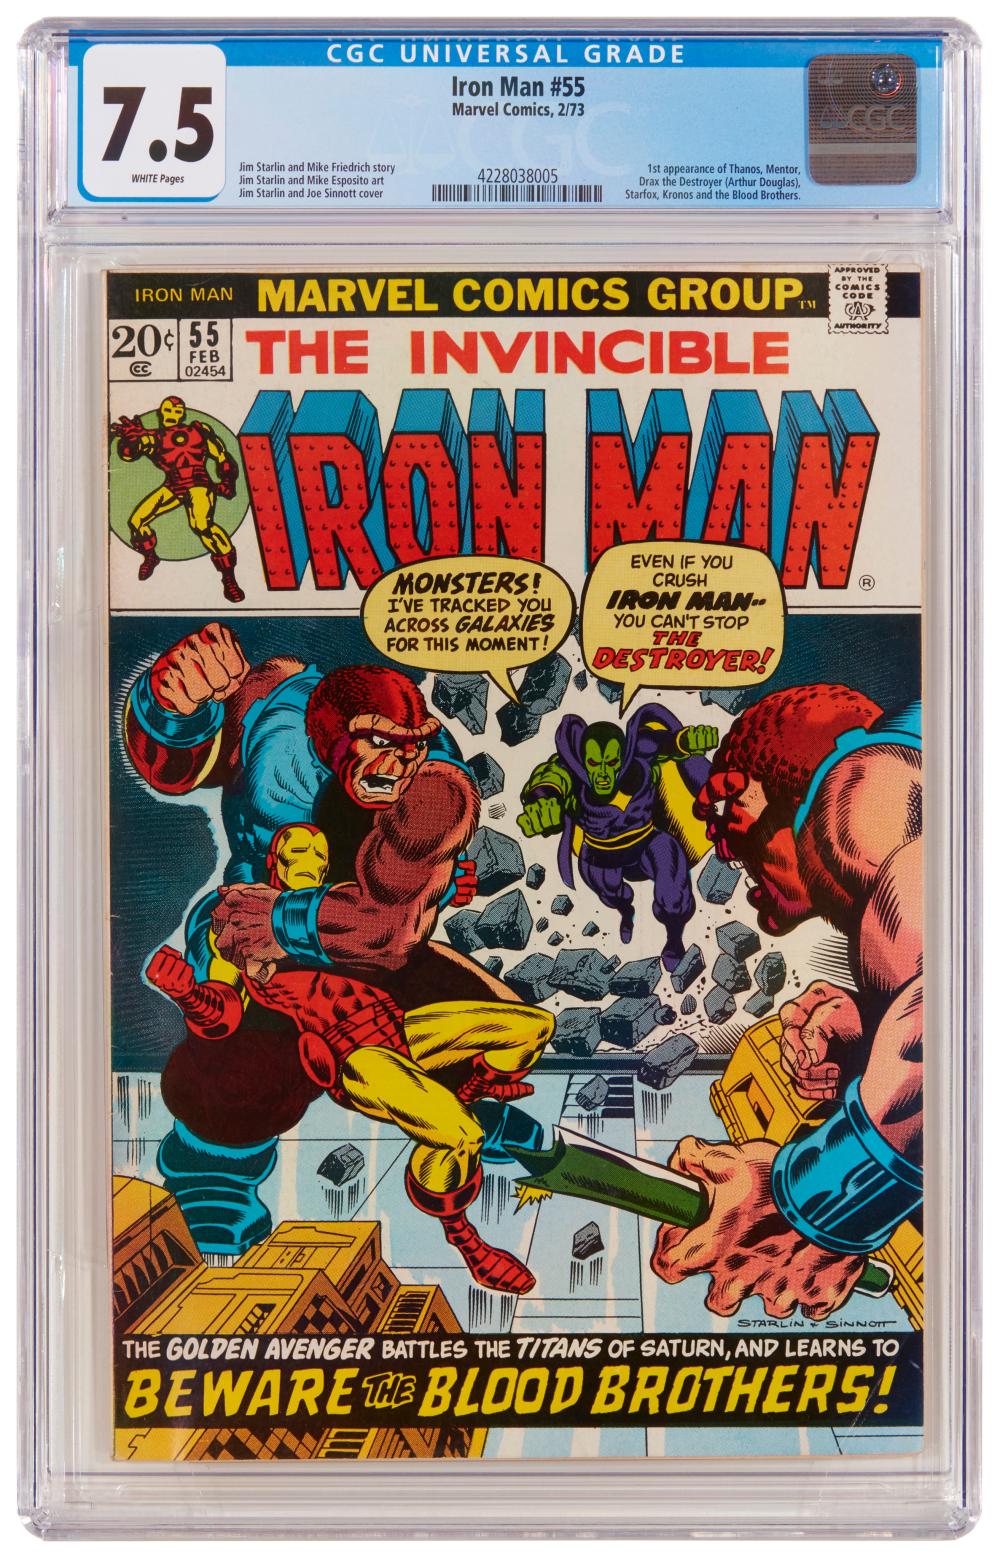 IRON MAN #55 (MARVEL COMICS, 1973)Iron